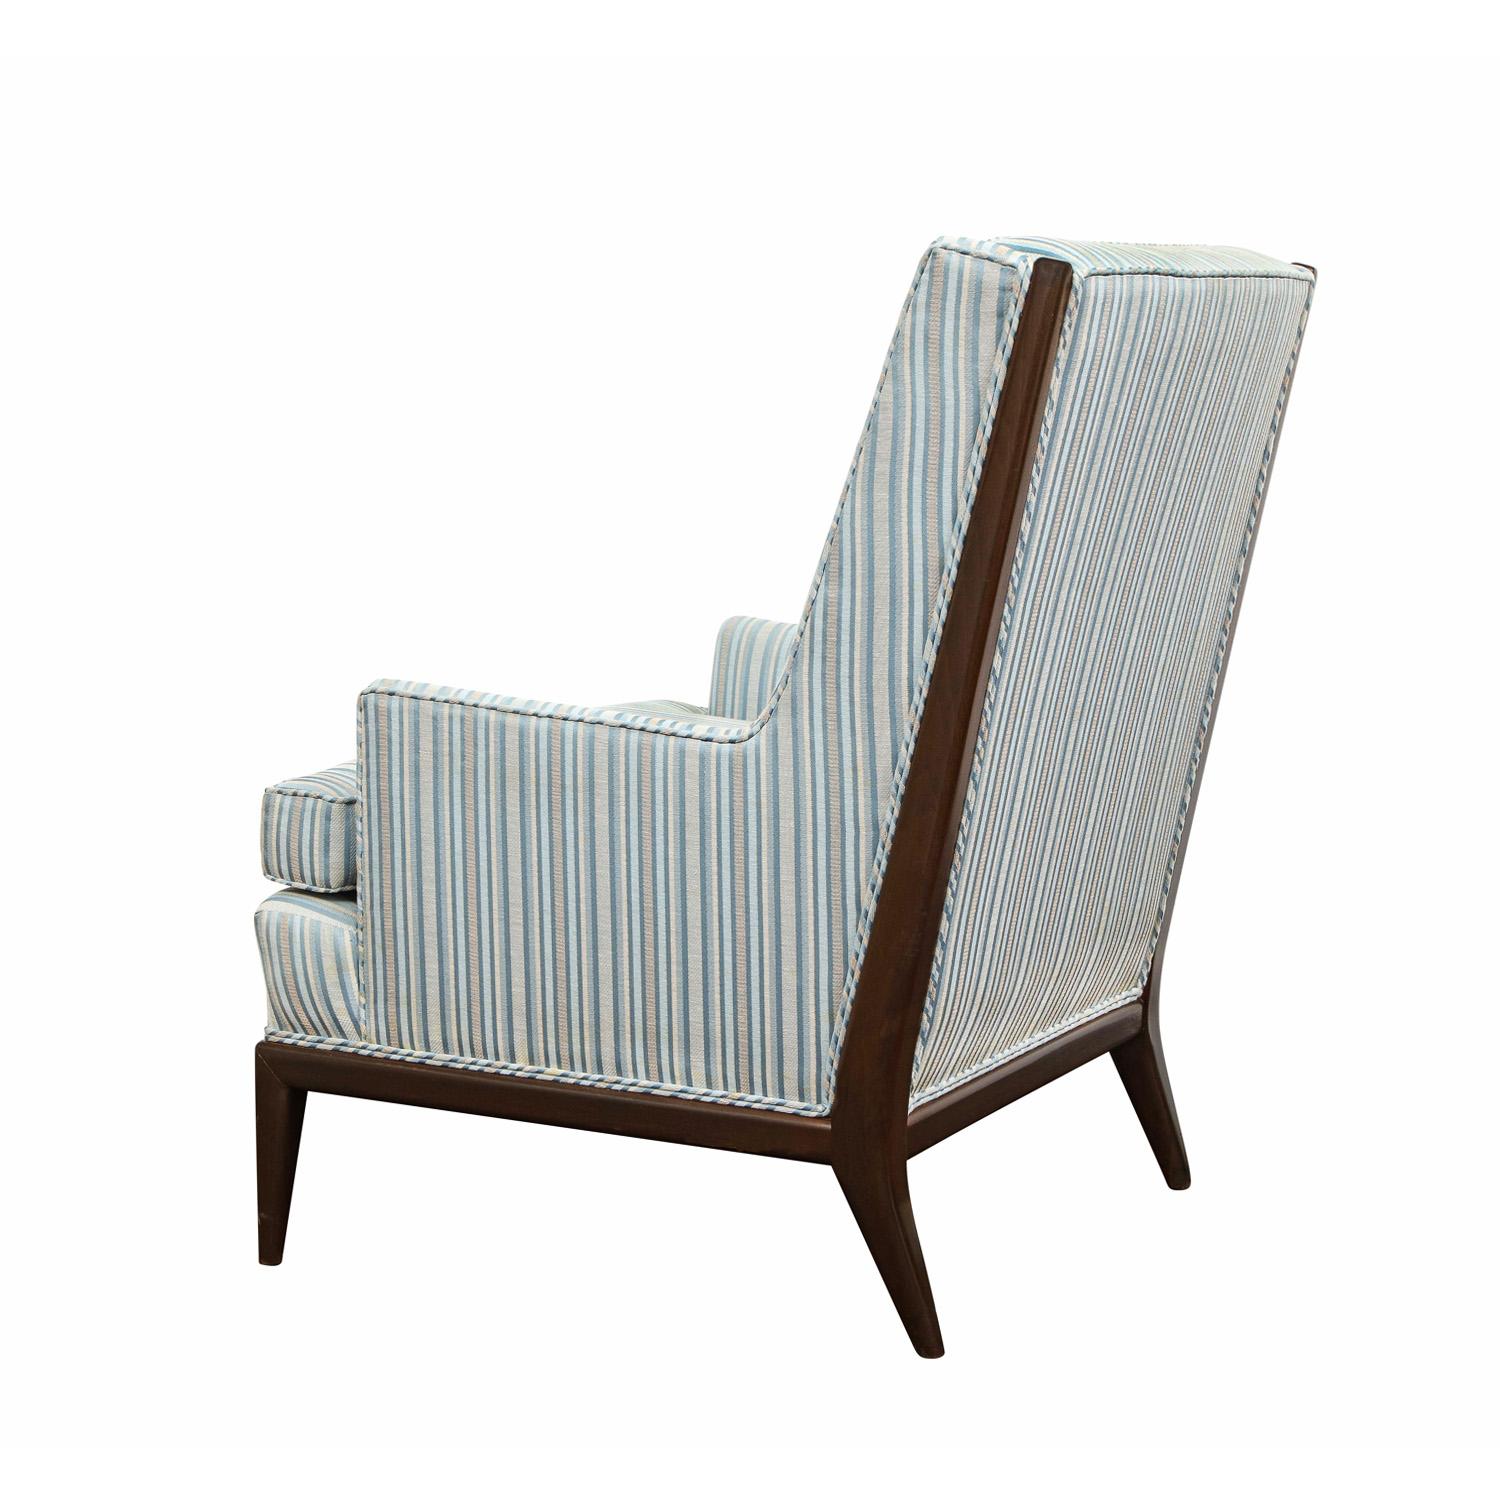 American T.H. Robsjohn-Gibbings Style High Back Lounge Chair, 1950s For Sale